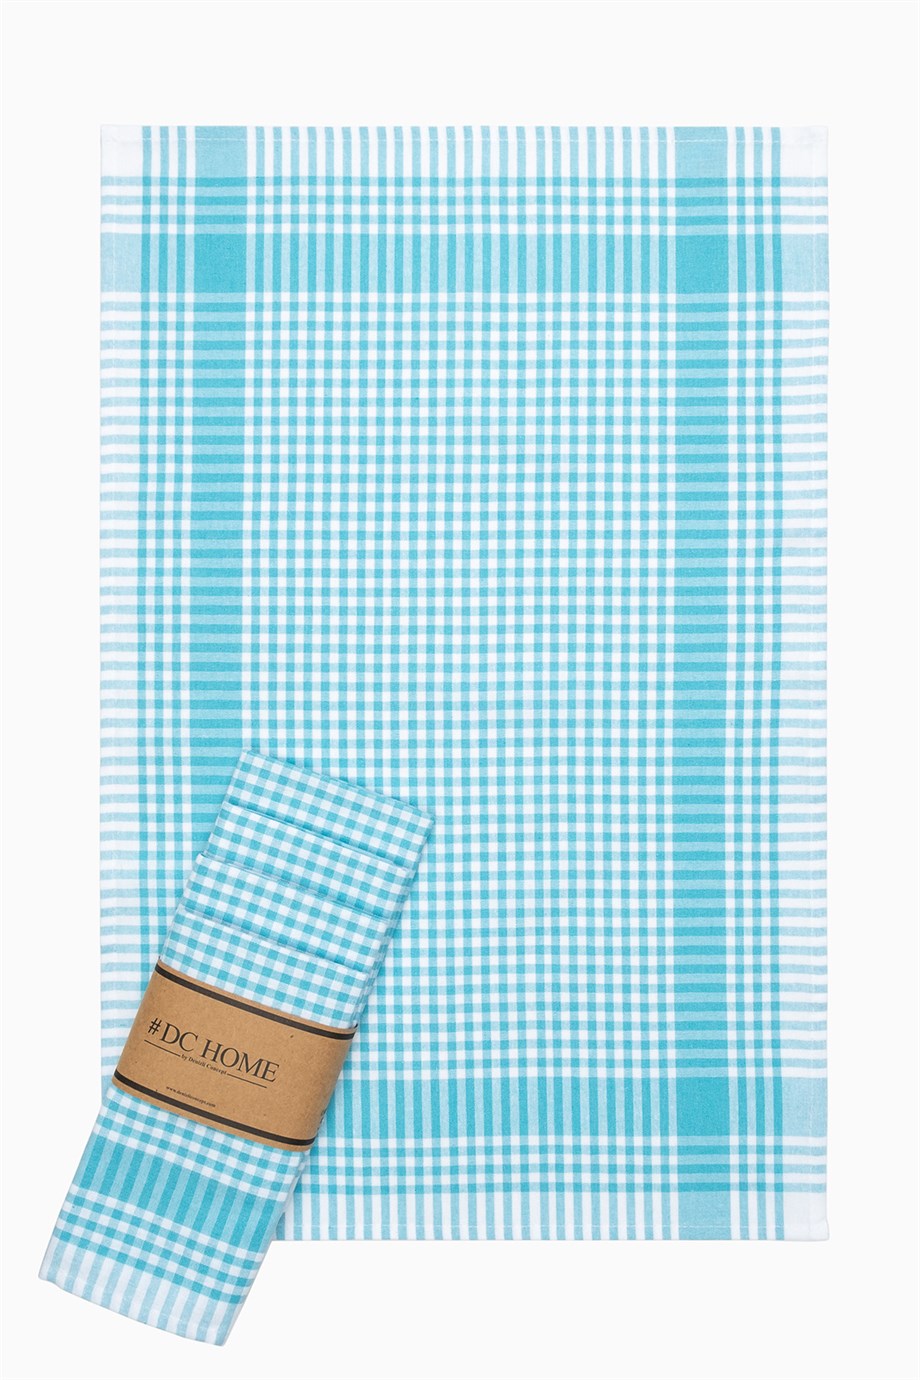 DENIZLI CONCEPT Petite Checkered Tea Towel Turquoise